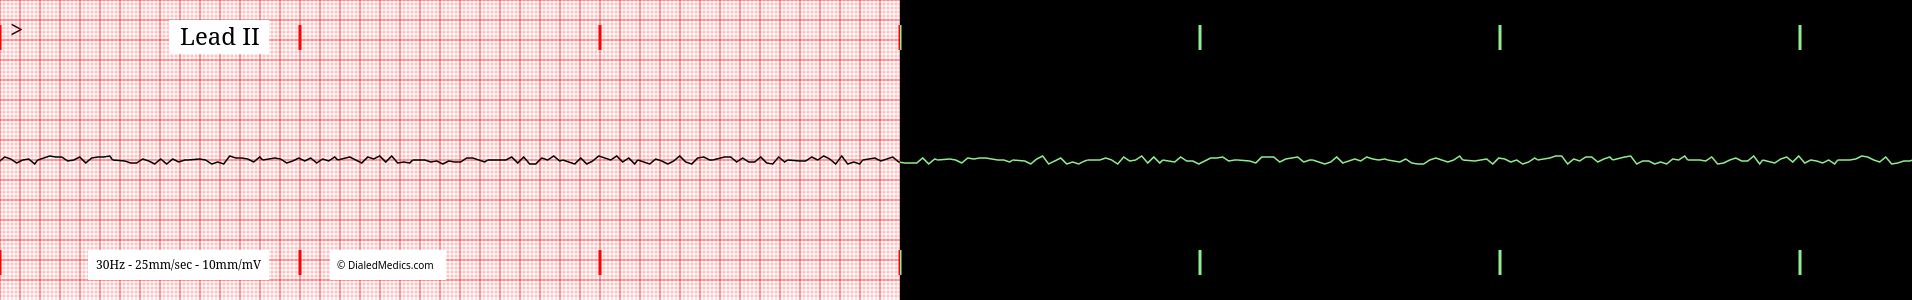 Practice Asystole EKG.